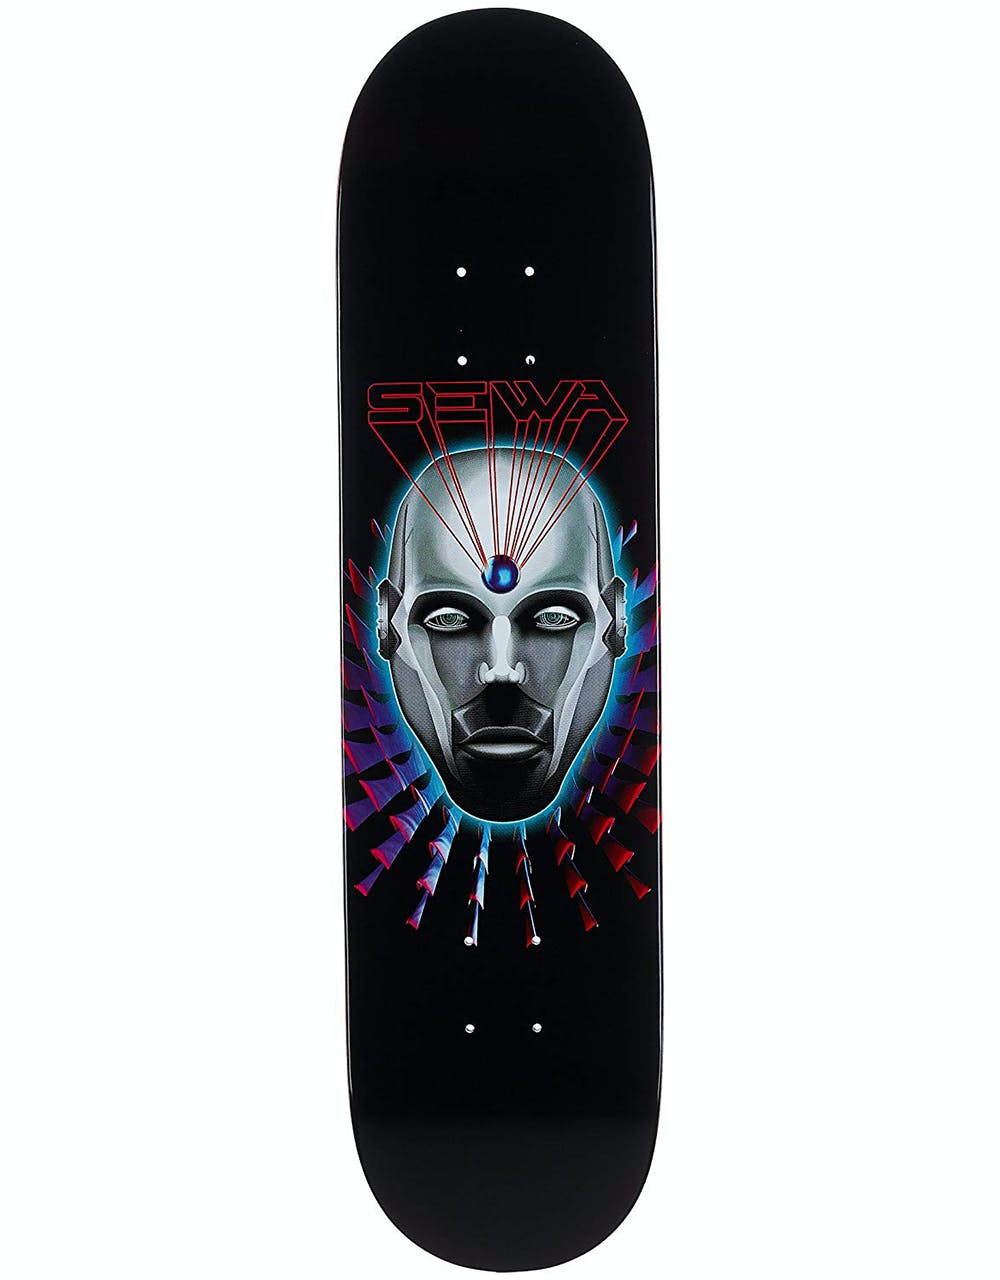 Blind Sewa Odyssey Skateboard Deck - 7.75"